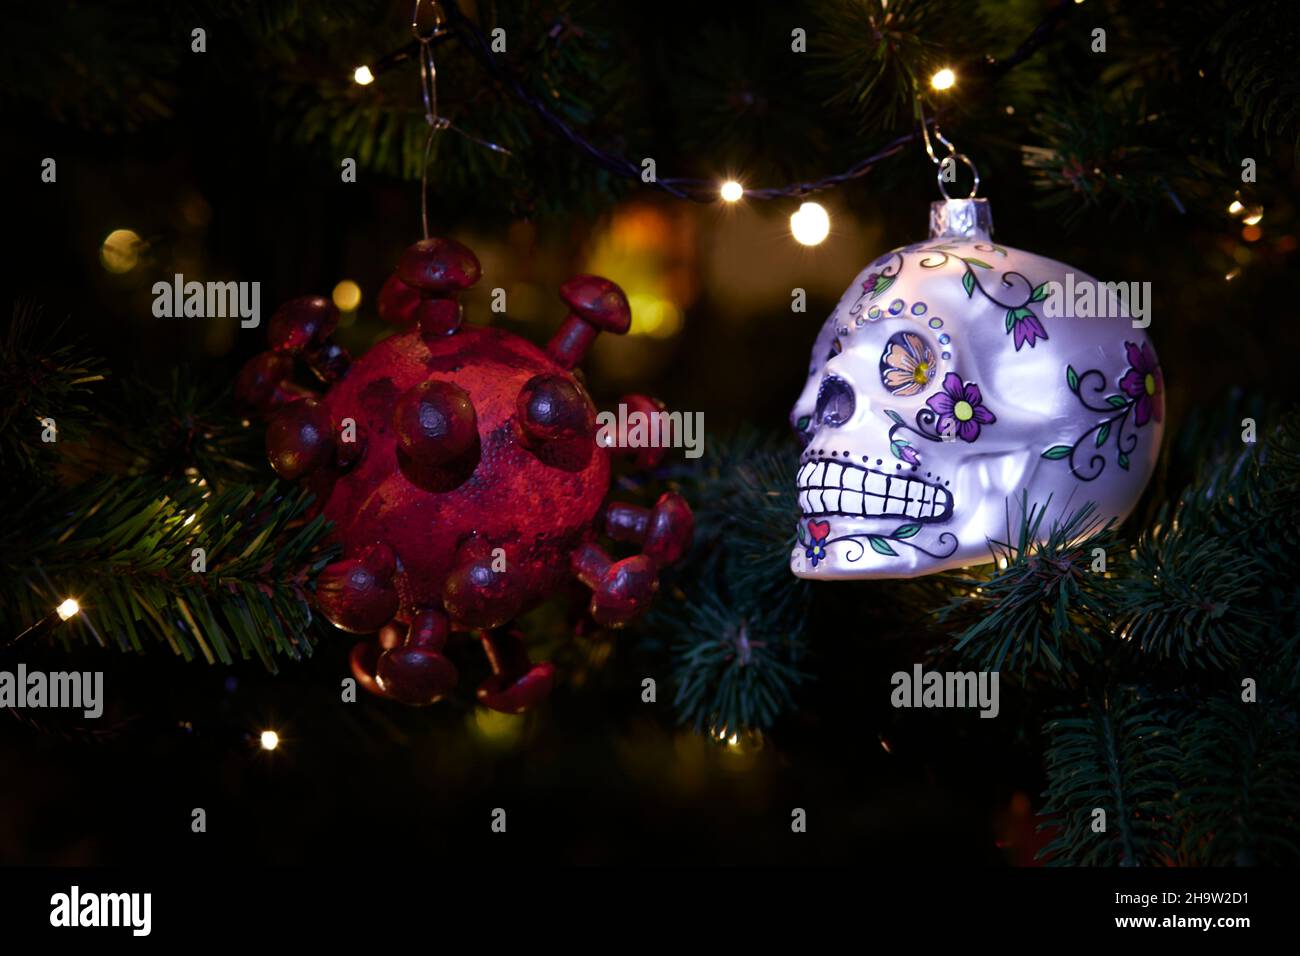 ornaments of a virus and a skull as symbol of impact of covid-19 on xmas season Stock Photo